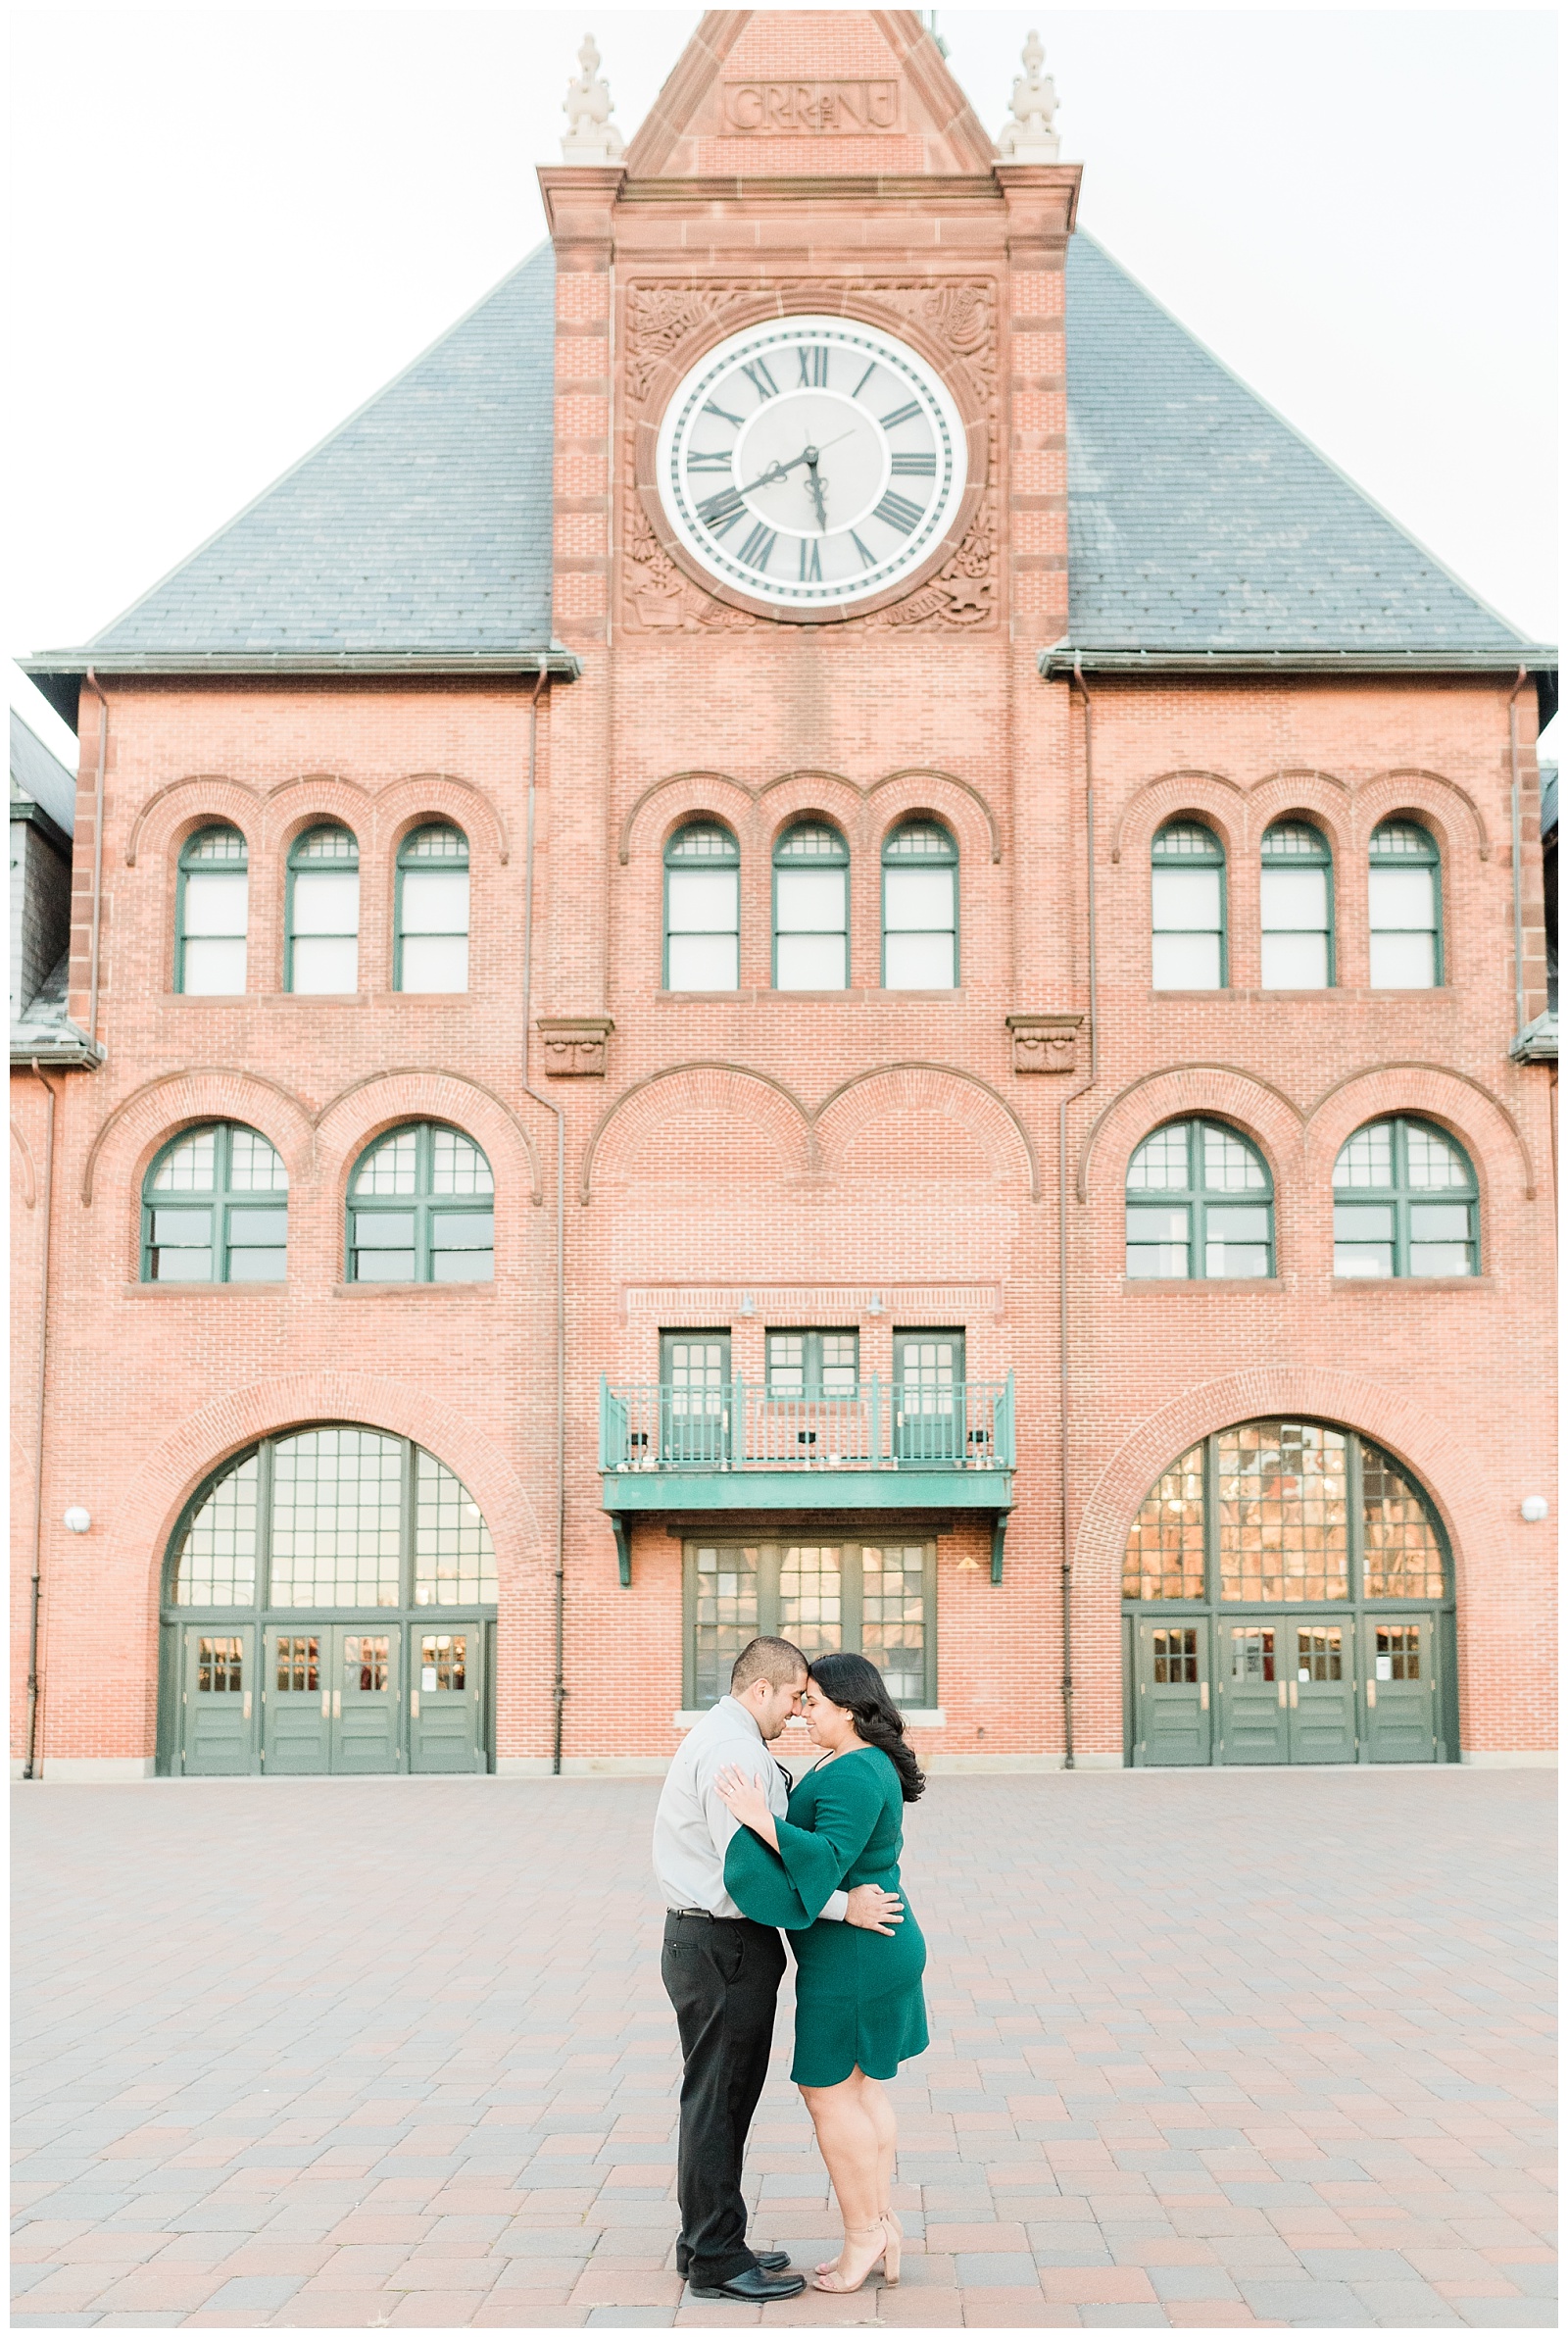 Clock,Engaged,Engagement Session,Jersey City,Liberty State Park,NJ,Train Station,Wedding Photographer,